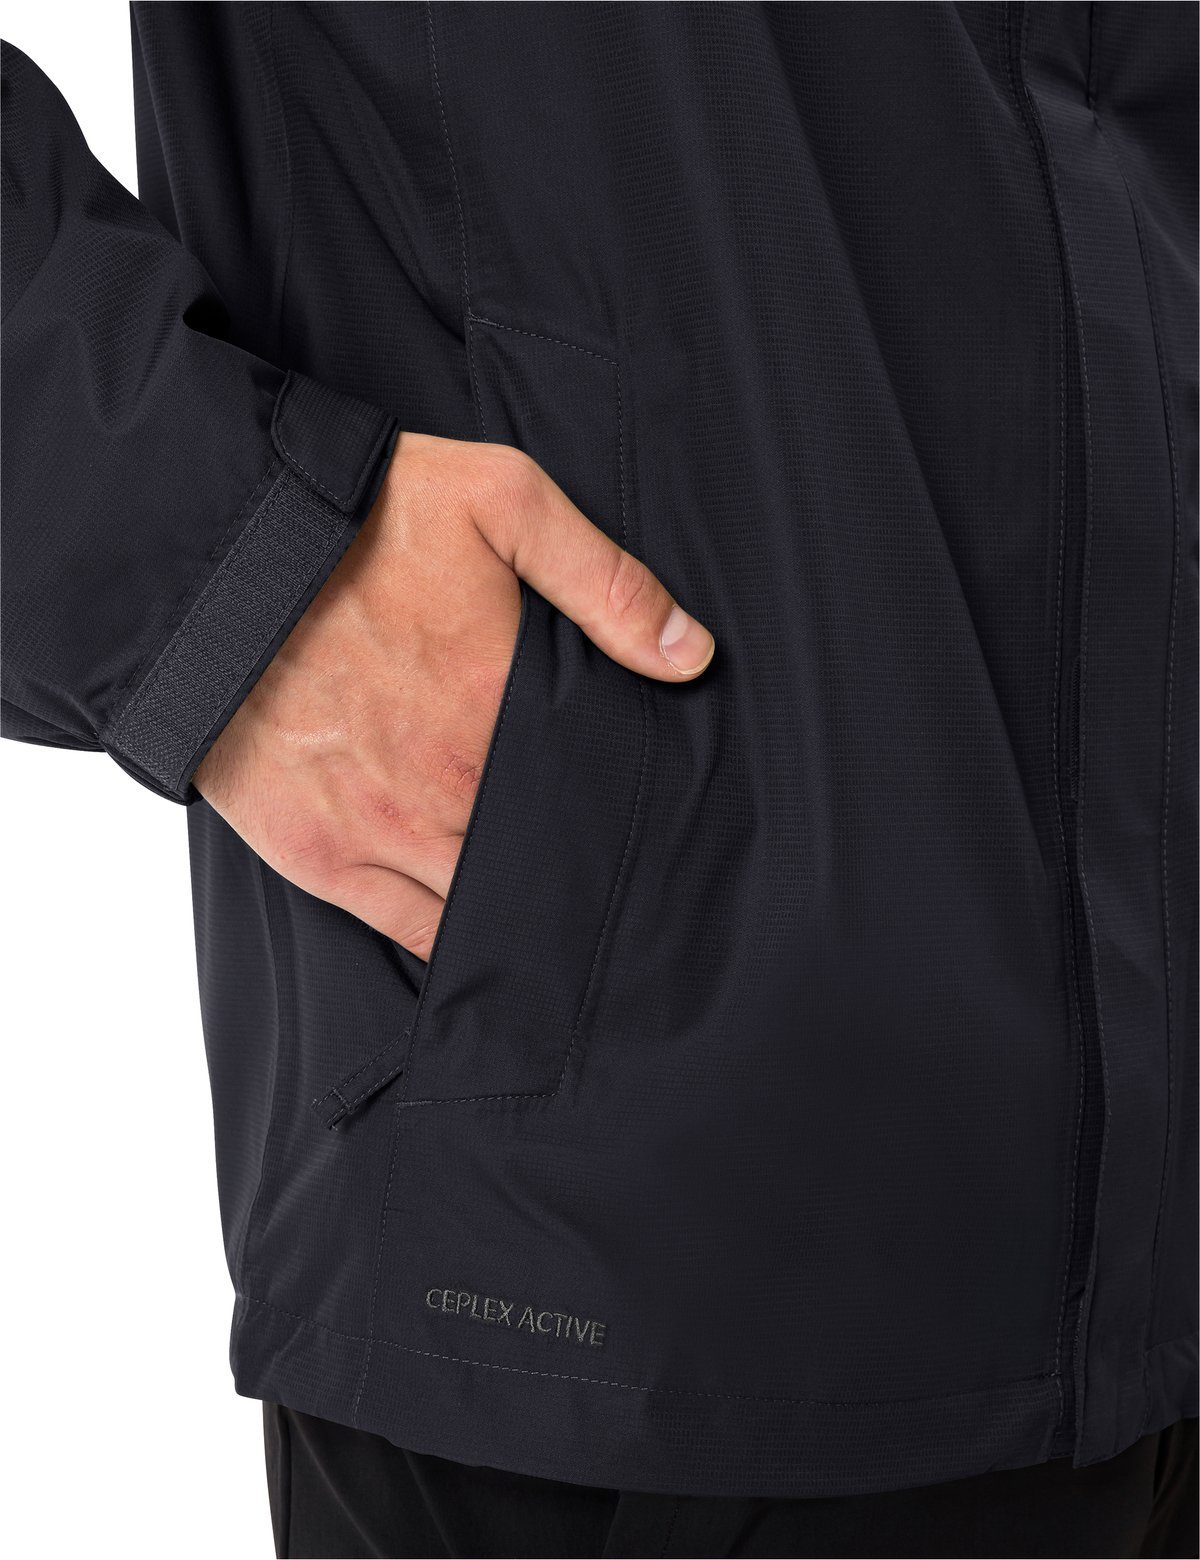 kompensiert (1-St) Klimaneutral Men's VAUDE Light black Outdoorjacke Escape Jacket